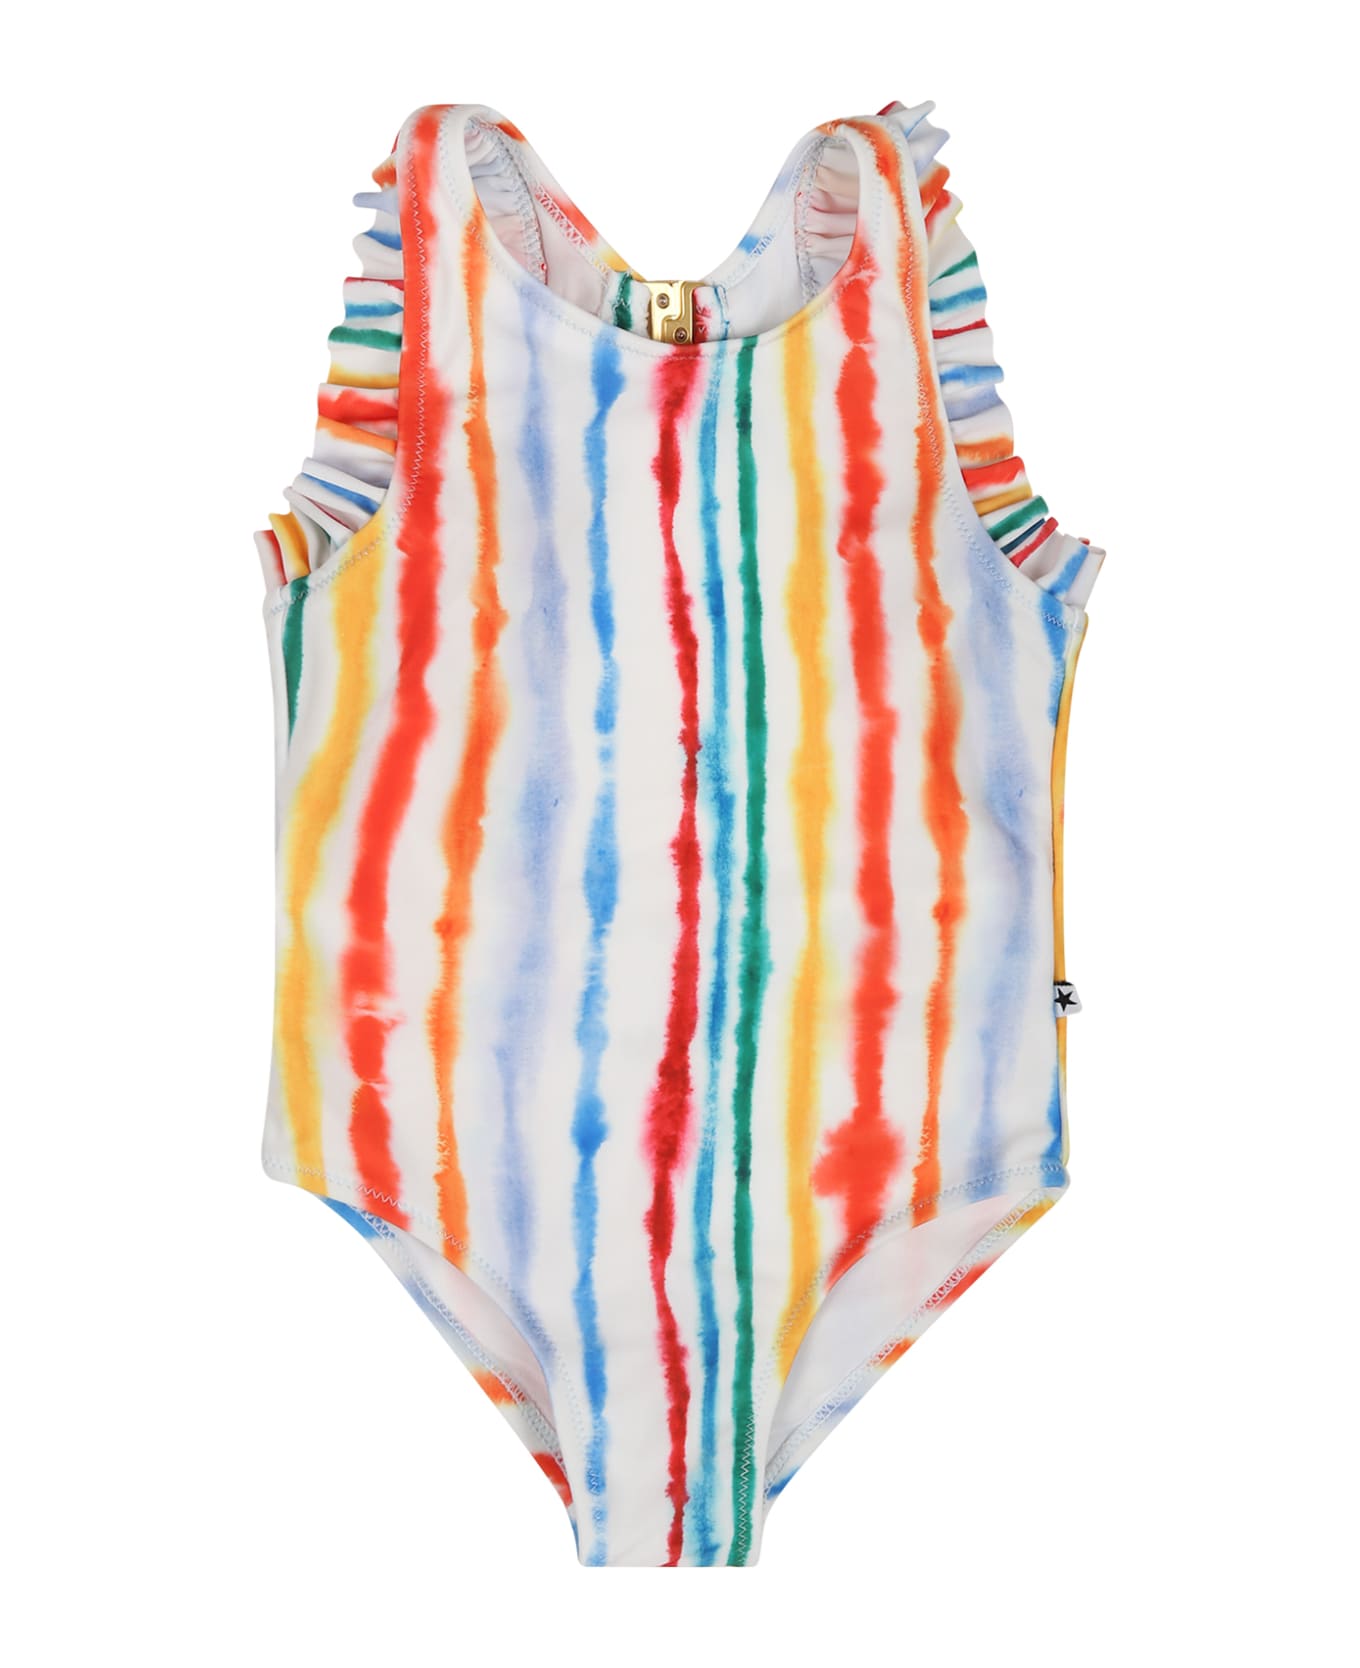 Molo White Swimsuit For Baby Girl - Multicolor 水着